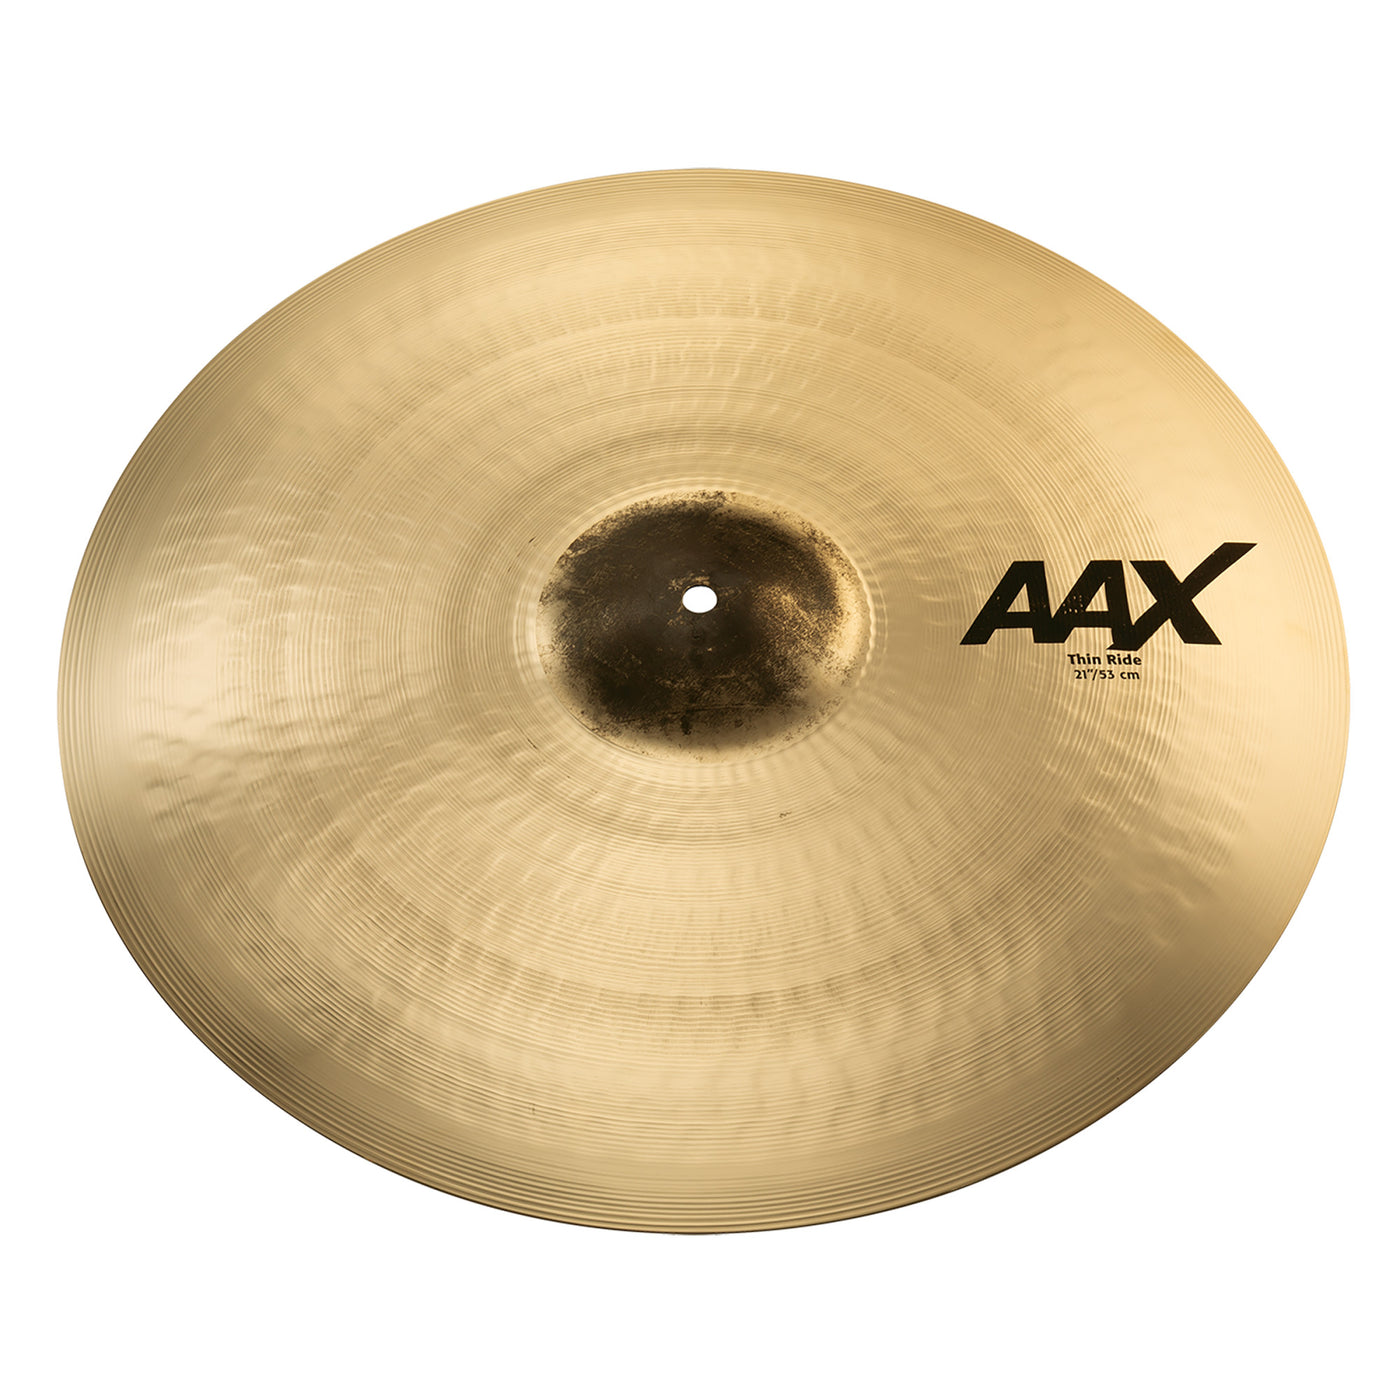 Sabian 21" AAX Thin Ride Cymbal - Brilliant Finish